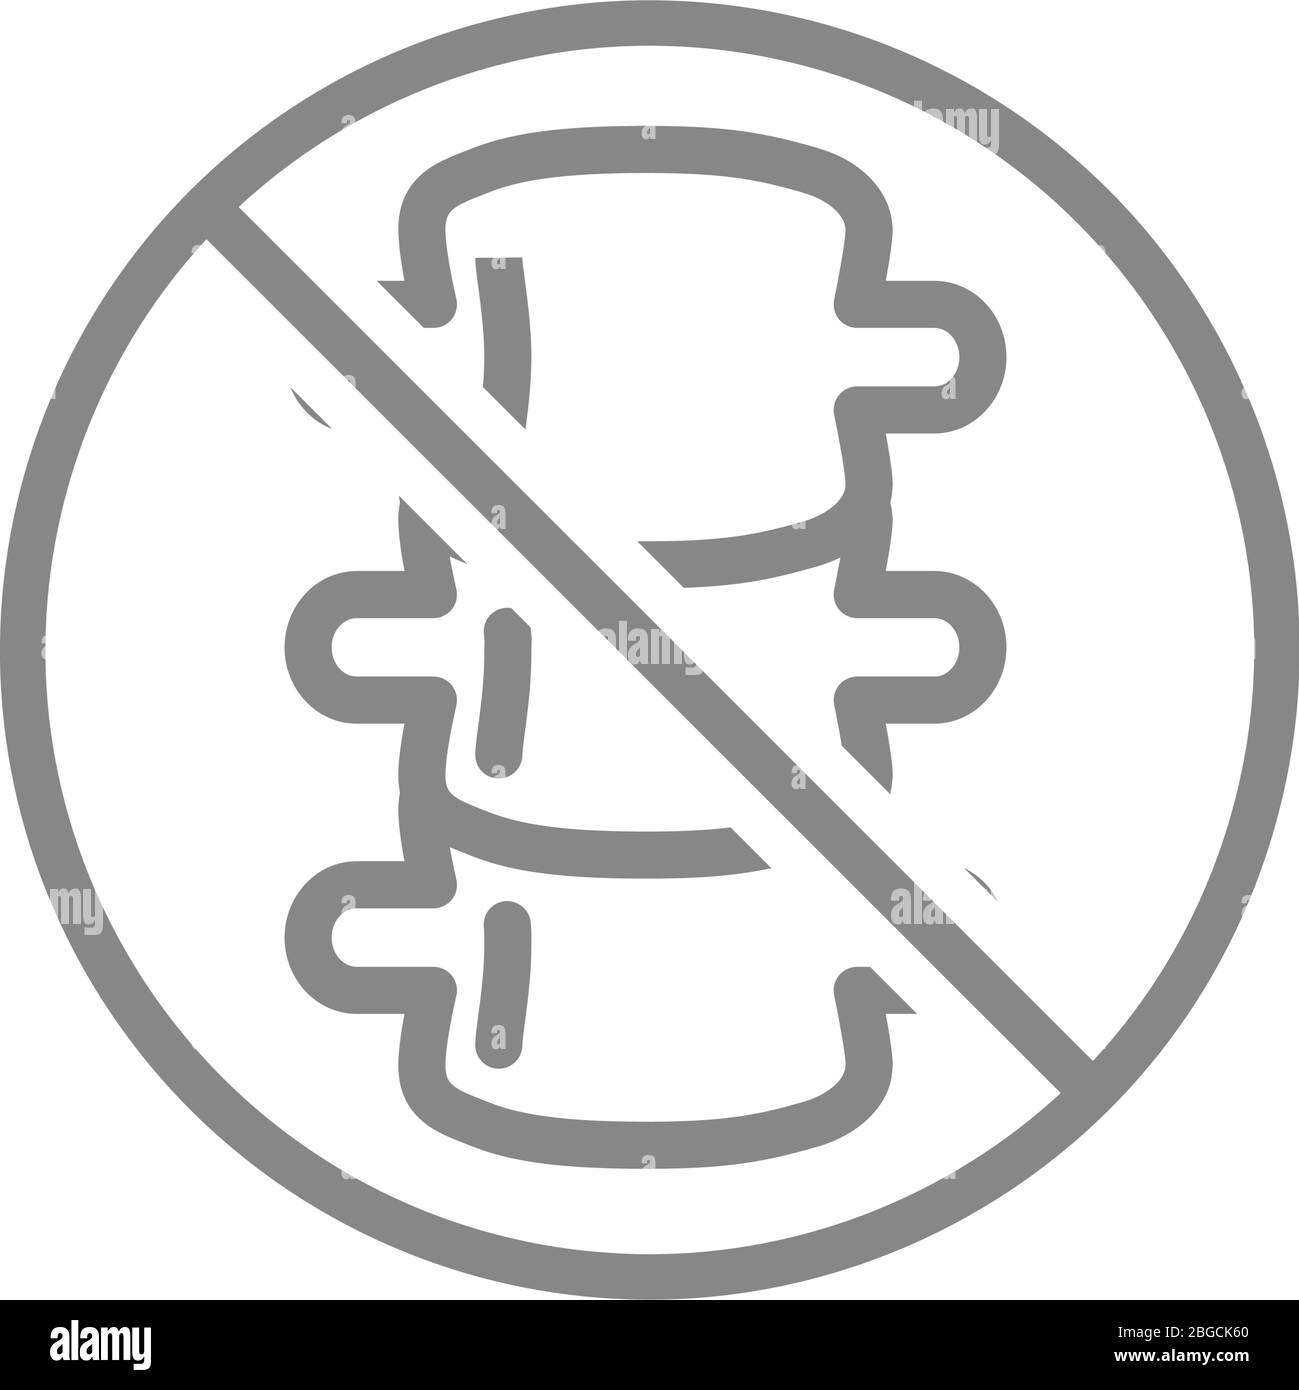 Forbidden sign with a spine line icon. Amputation internal organ, no backbone, transplant rejection symbol Stock Vector